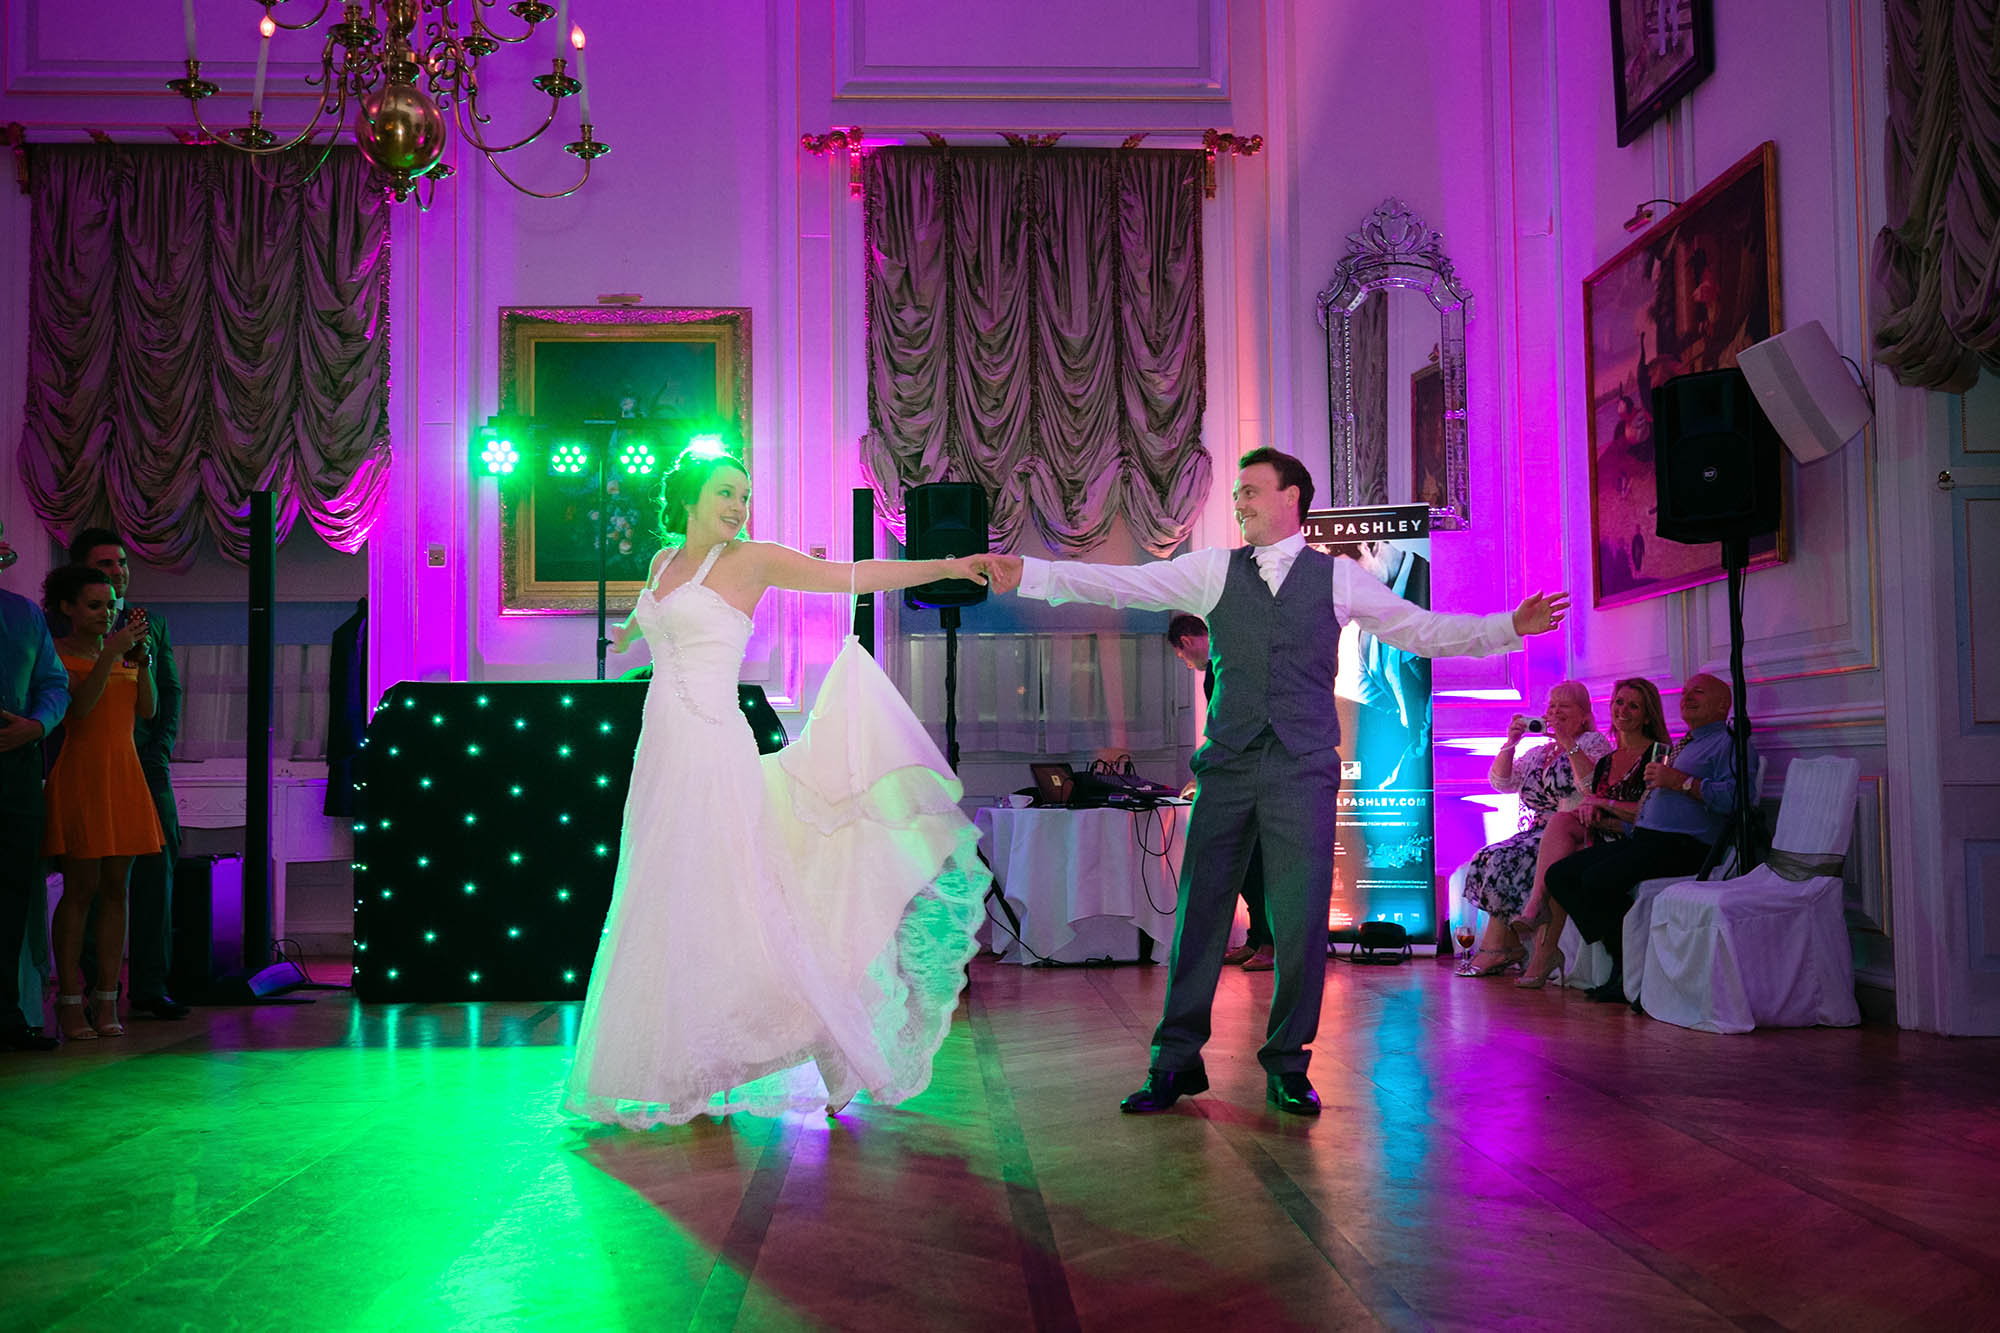 Bride and groom hit the dance floor - Sheffield wedding photographer John Mottershaw